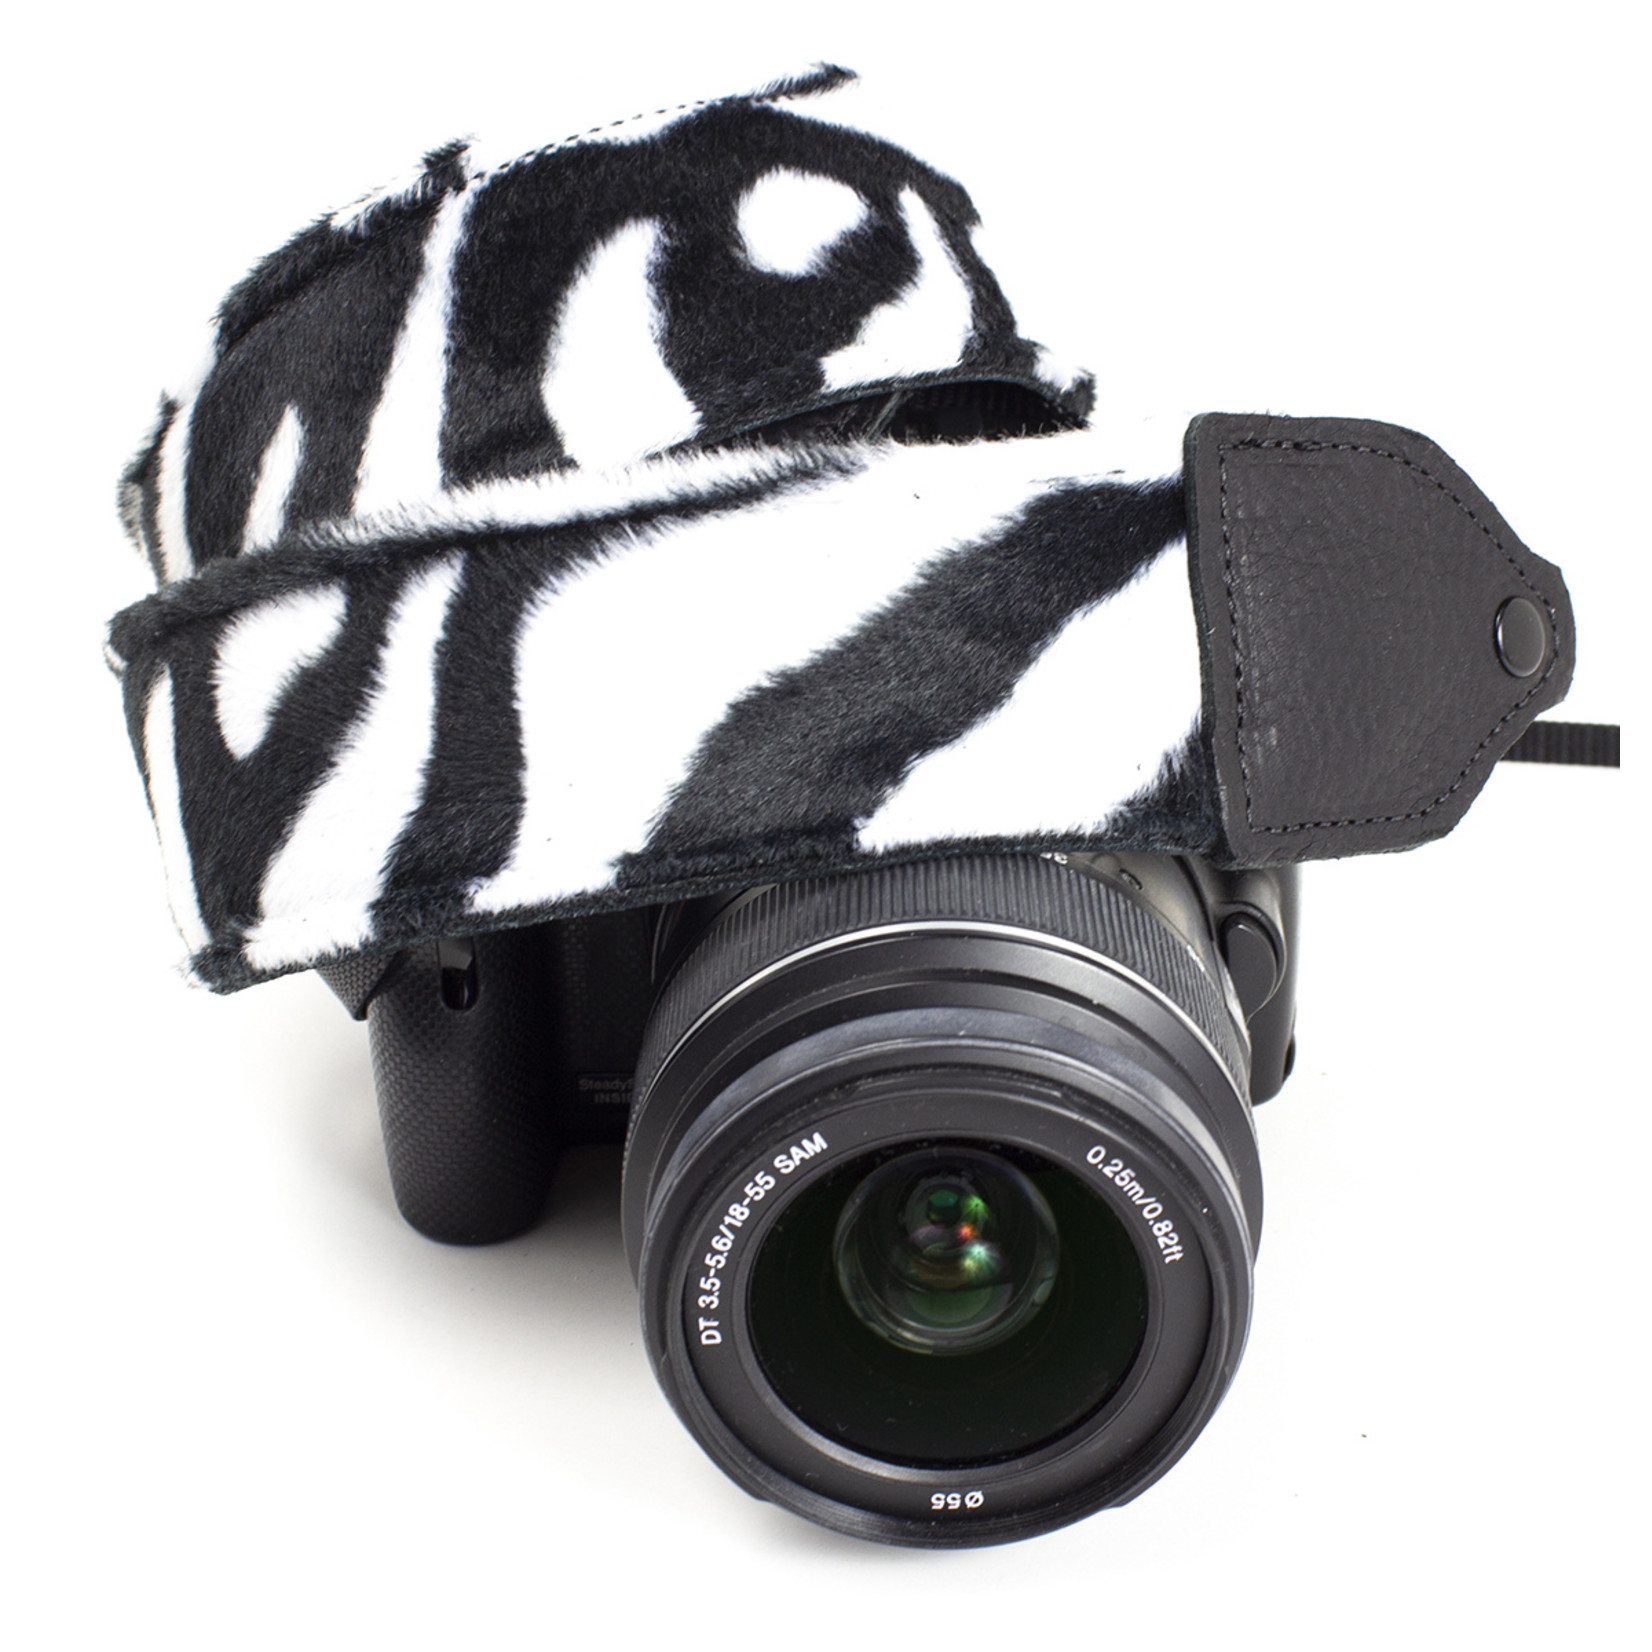 Perris Leathers Furry Fabric Zebra Camera Strap